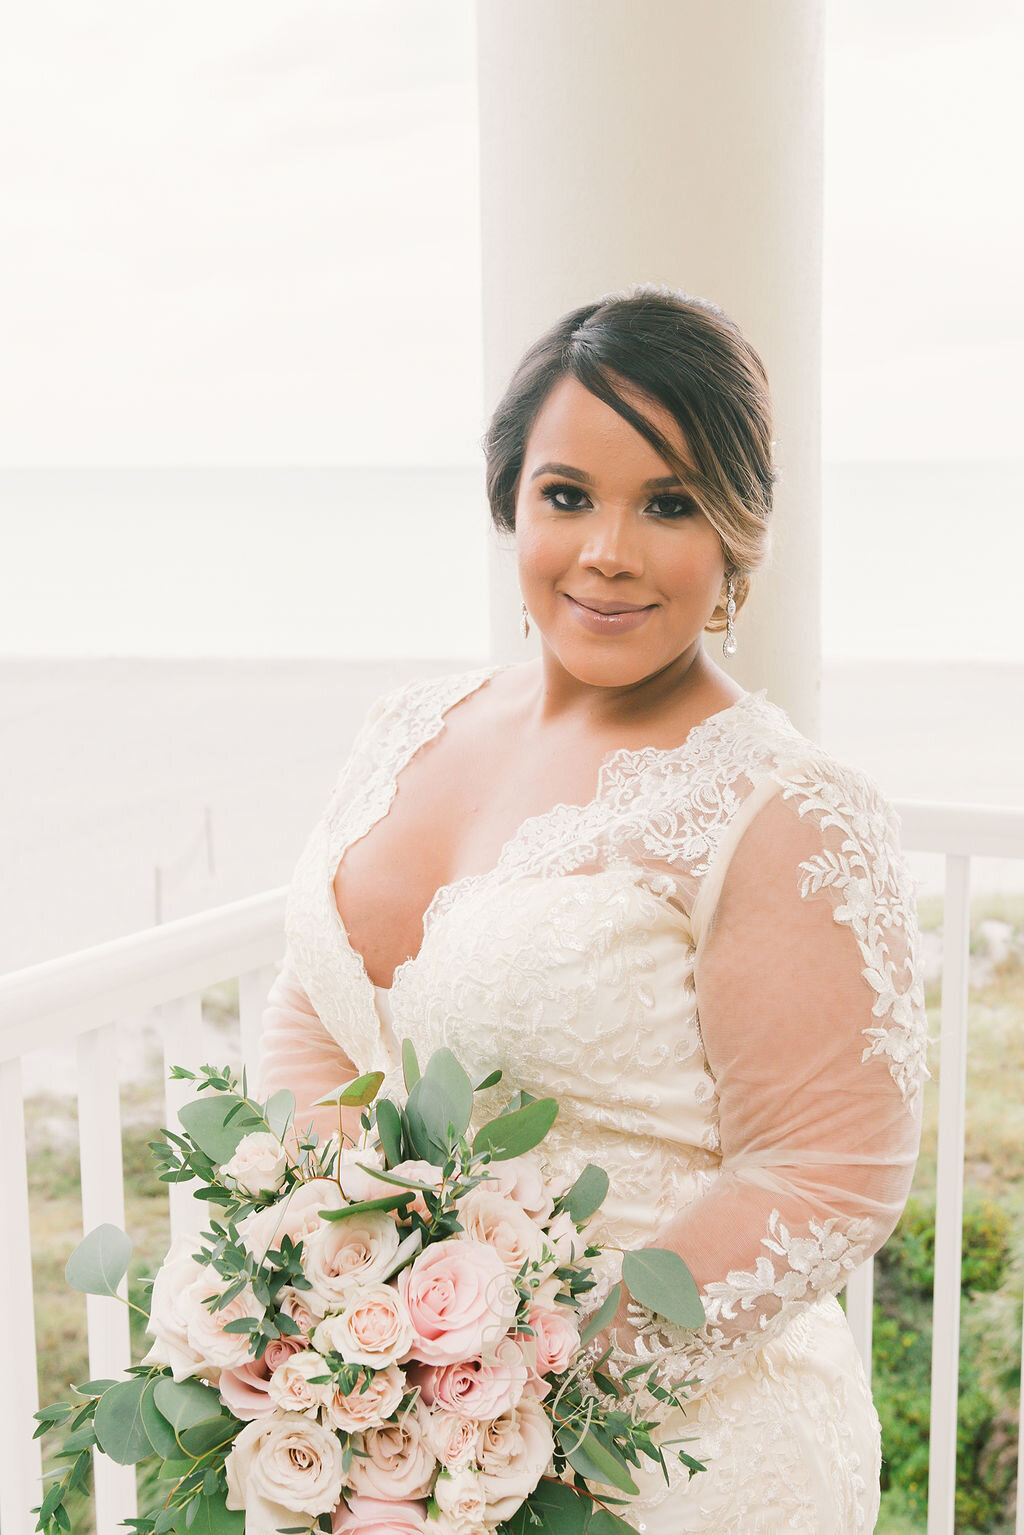 v-neck-wedding-dress, v-neck-lace-wedding-dress, long-sleeved-lace-wedding-dress, pink-and-white-flower-bouquet, front-of-wedding-dress